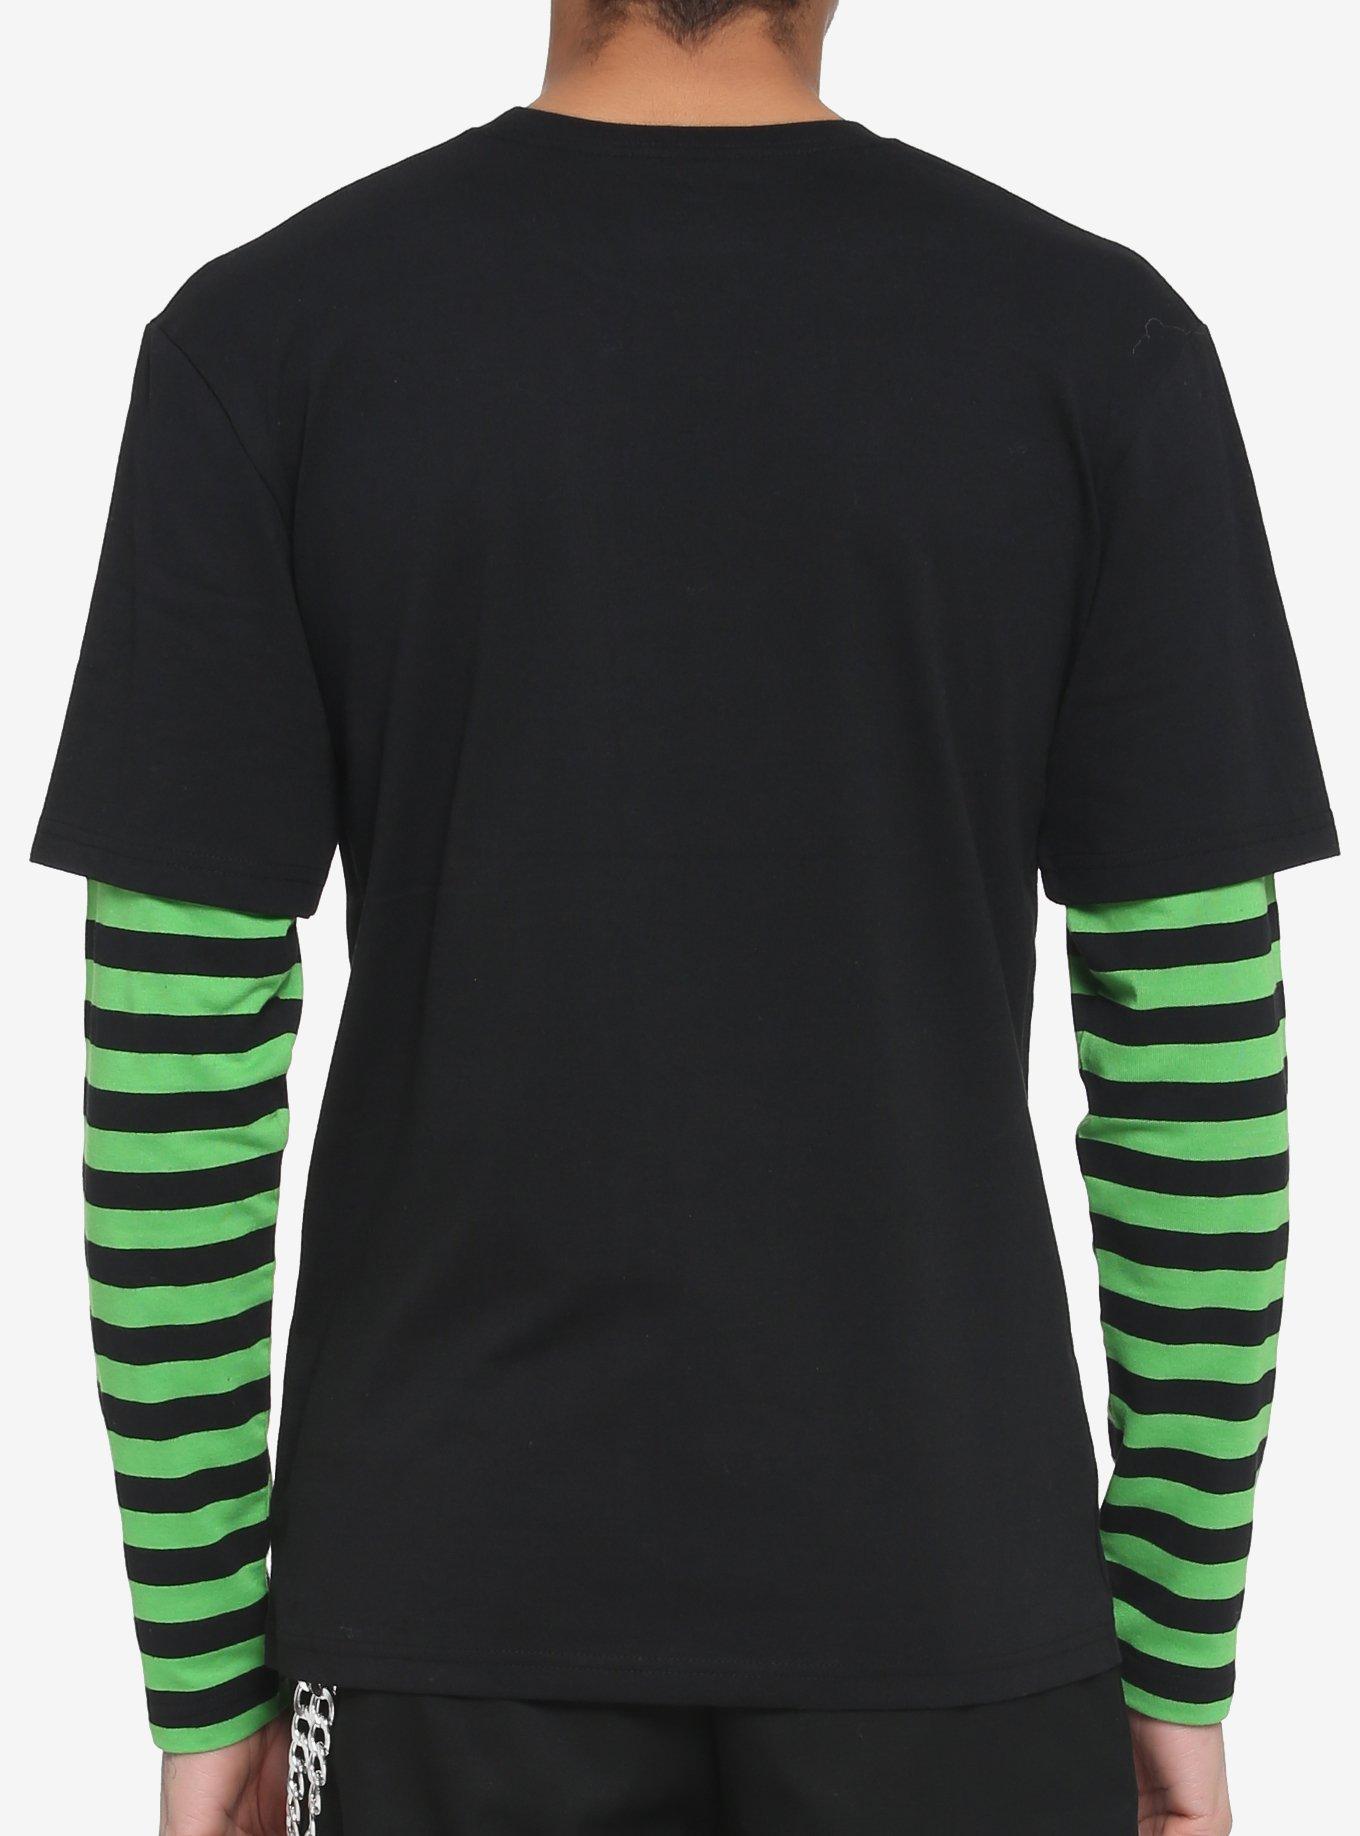 Black & Neon Green Stripe Sleeve Long-Sleeve T-Shirt, BLACK  GREEN, alternate